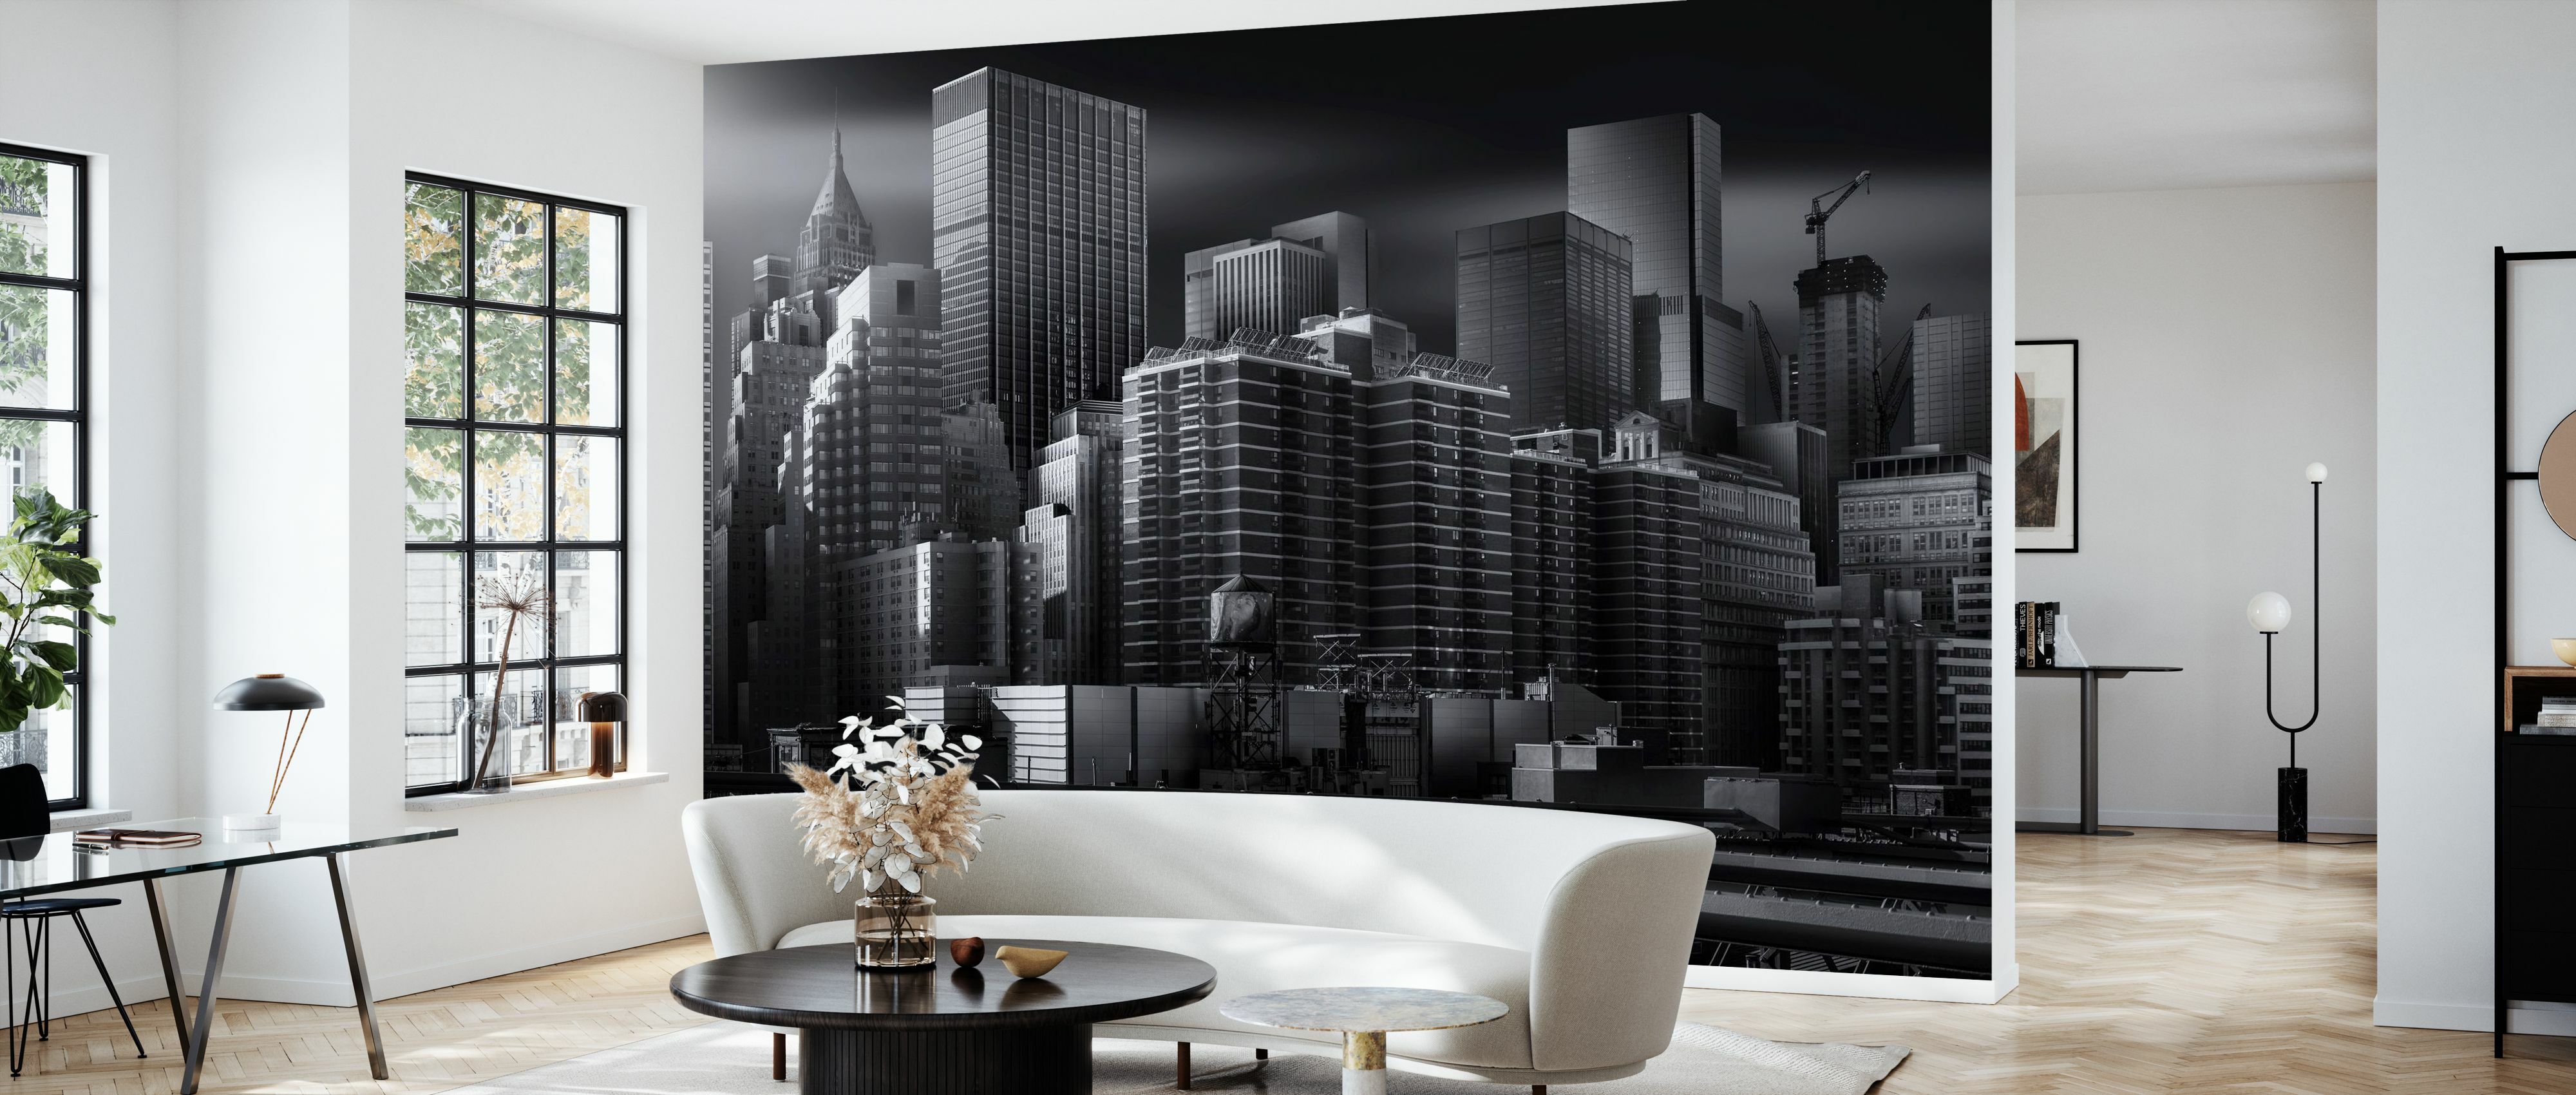 Skyscrapers New York Wall Mural Black & White Photo Wallpaper Living Room Decor 